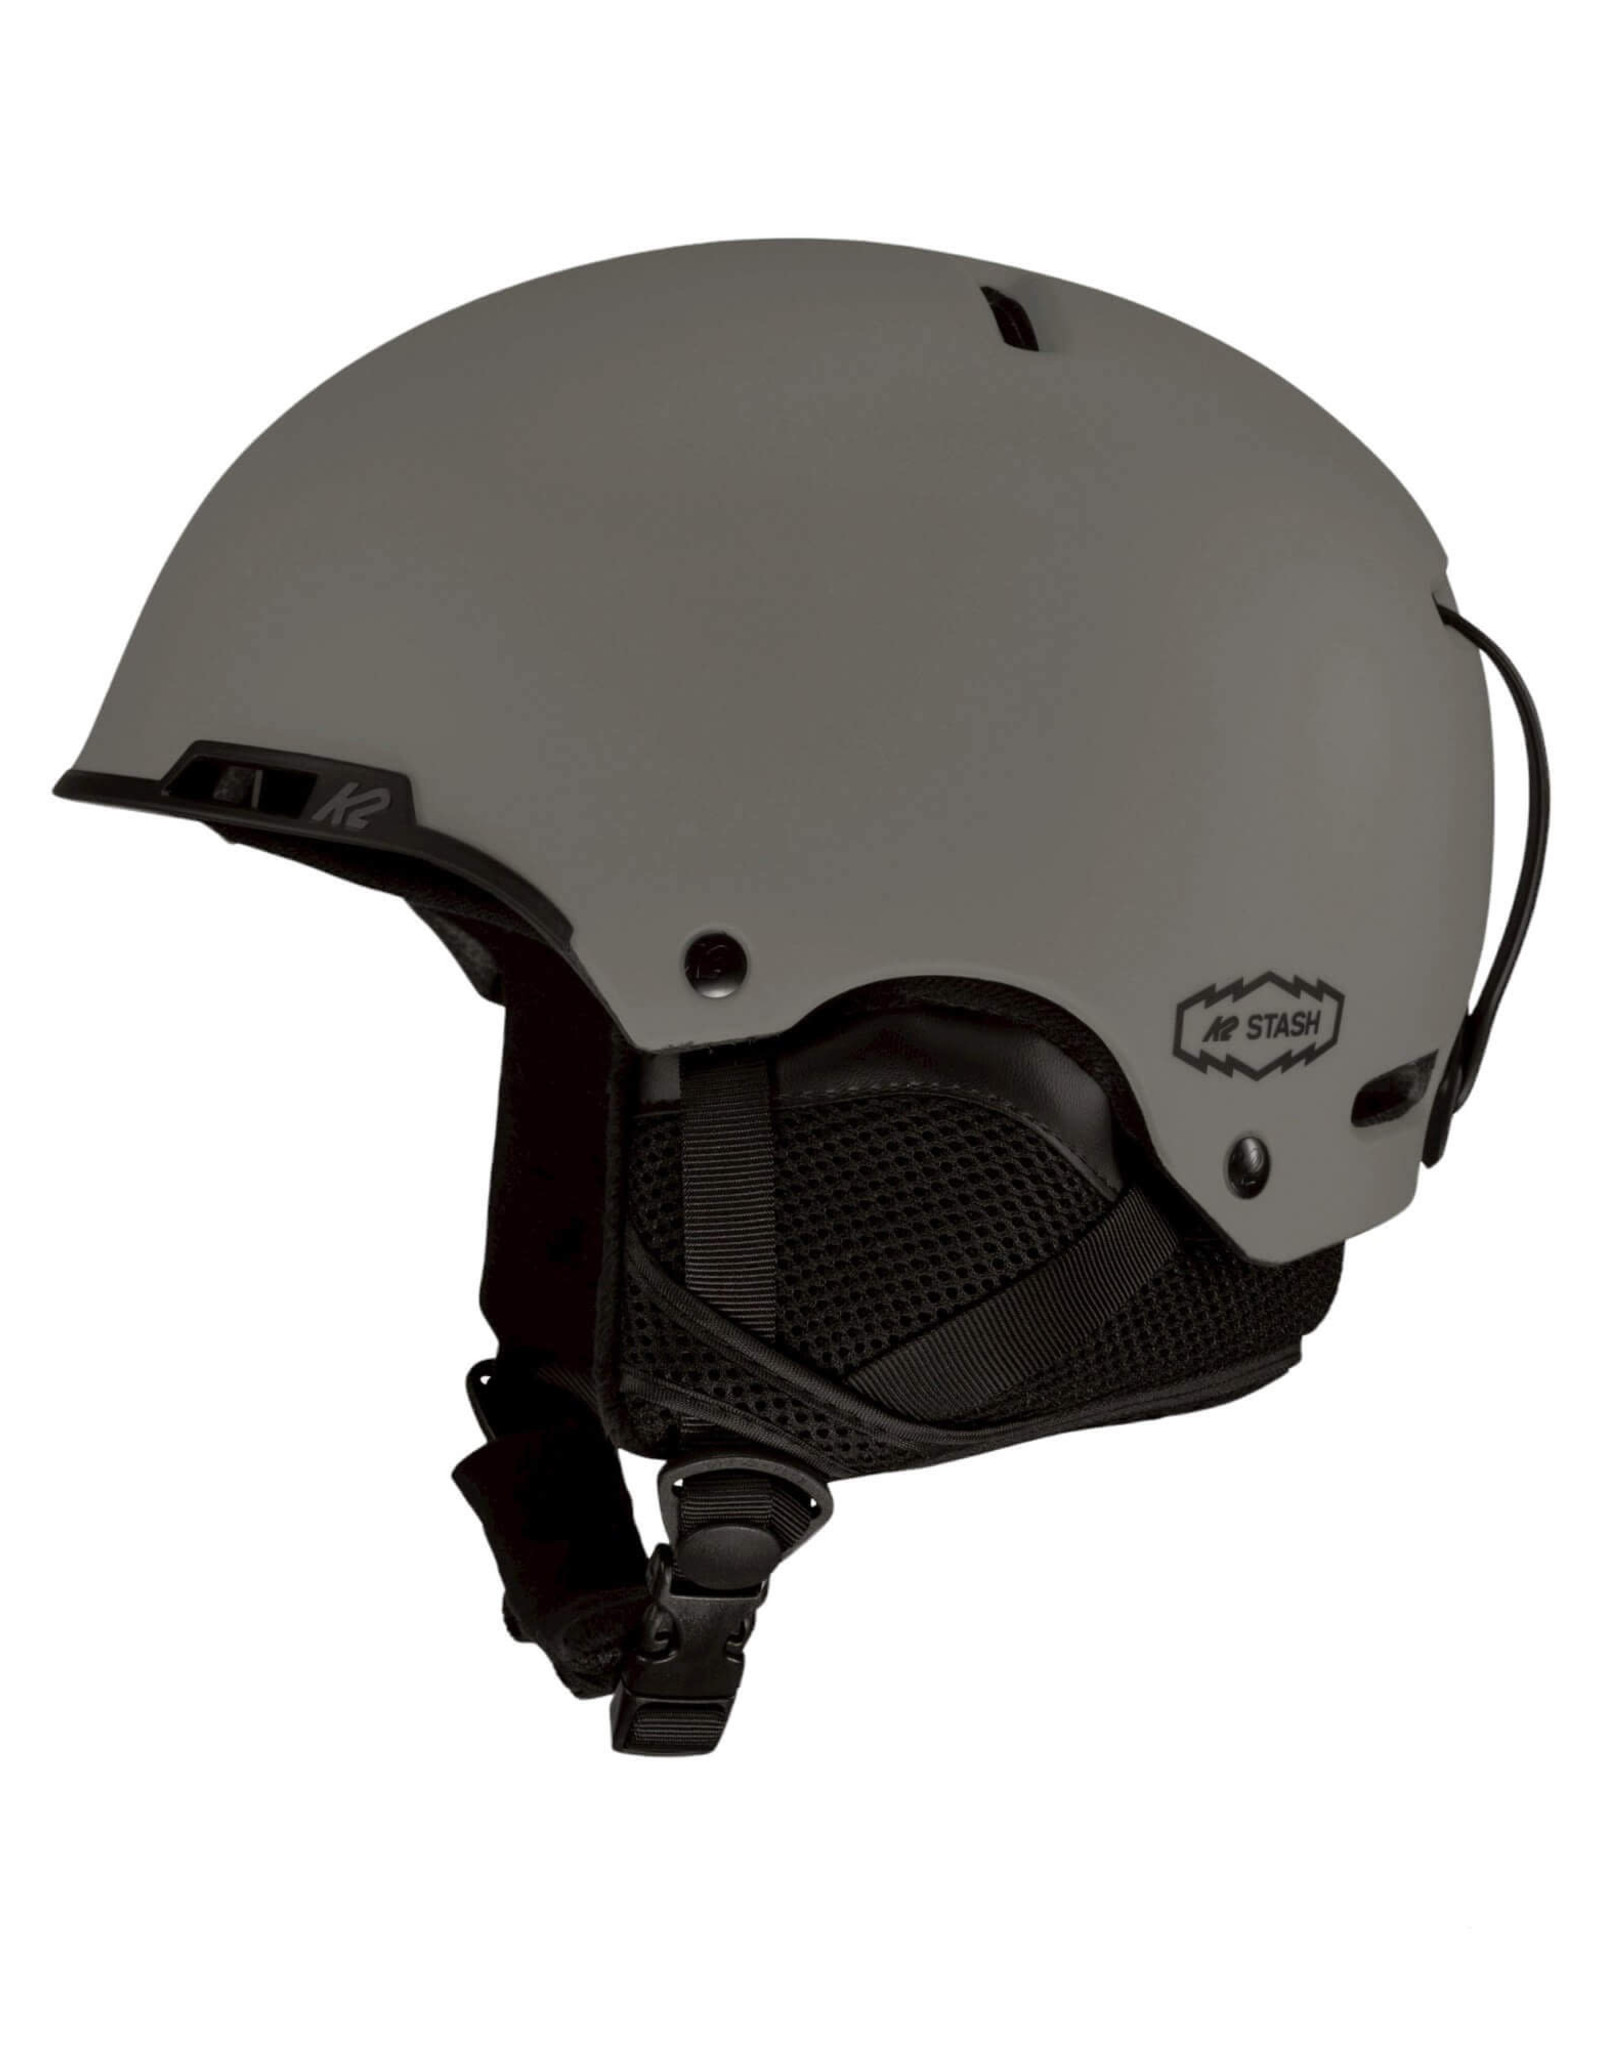 K2 K2 STASH Helmet-Smoke Med